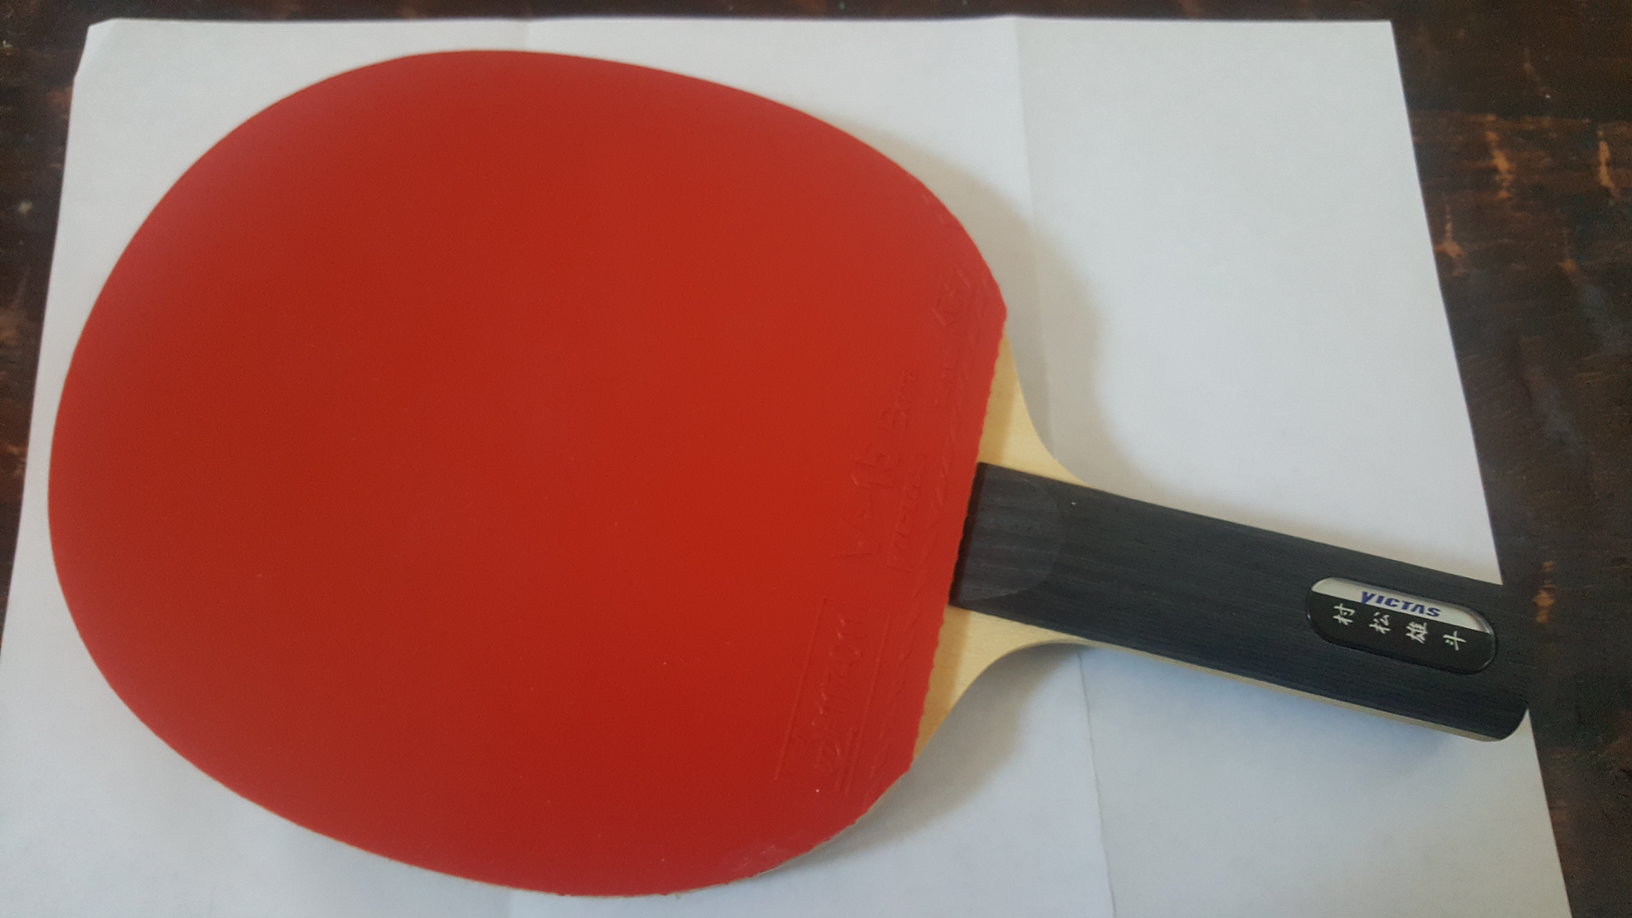 Fs Victas Yuto combo - Alex Table Tennis - MyTableTennis.NET Forum